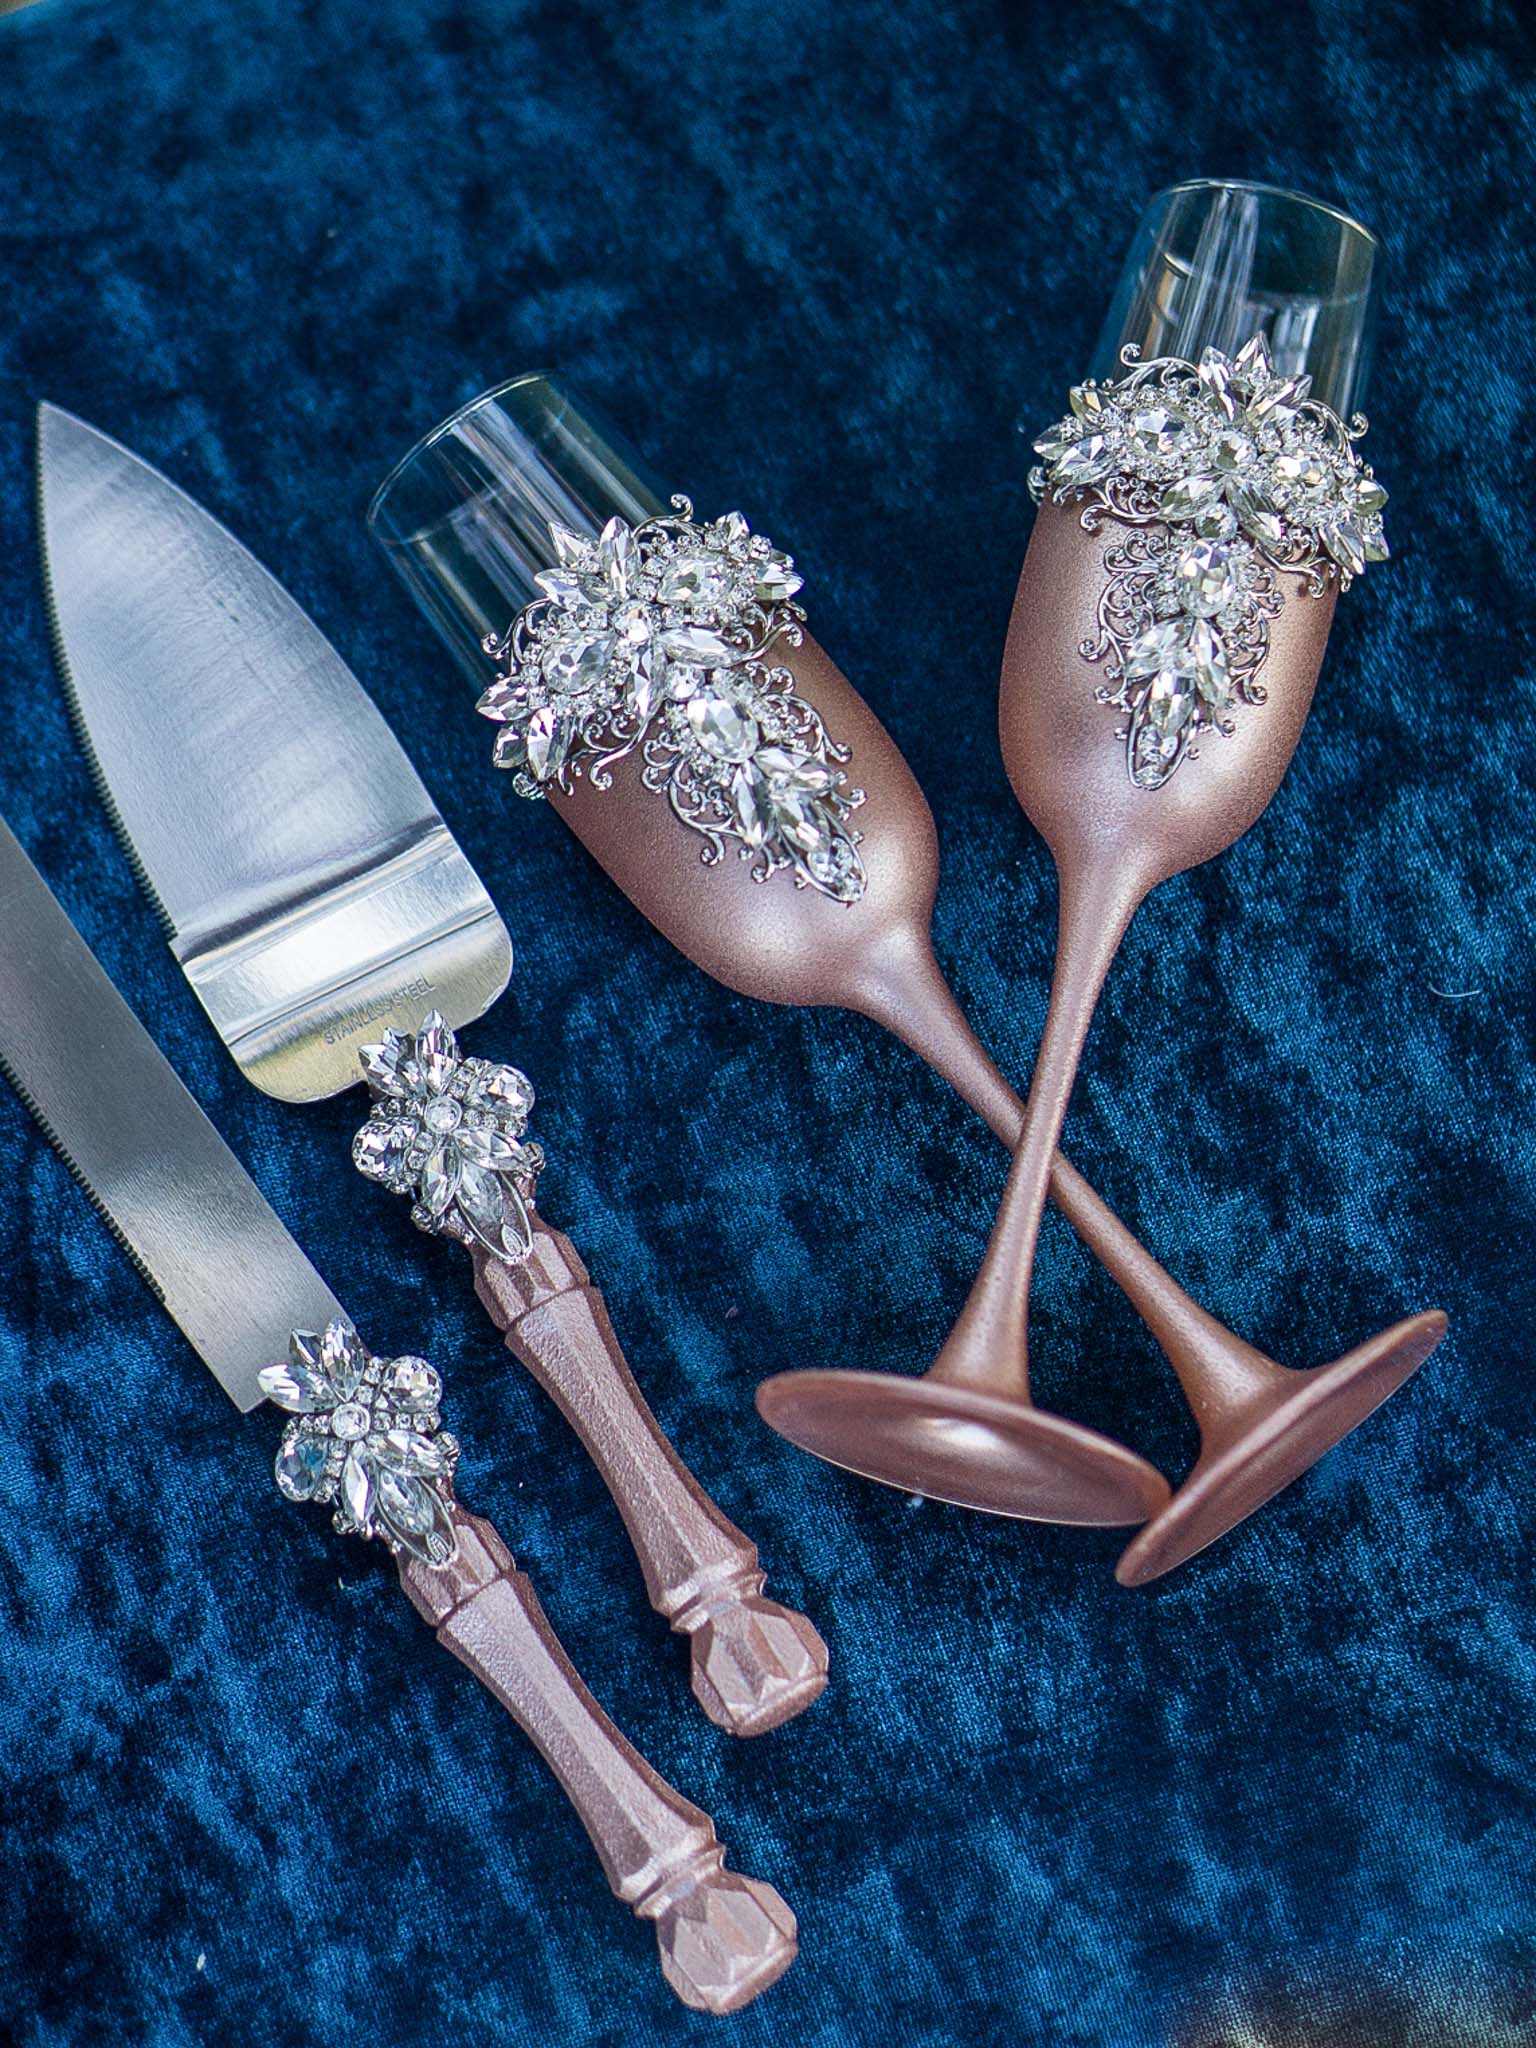 Wedding cake cutting utensils with intricate filigree